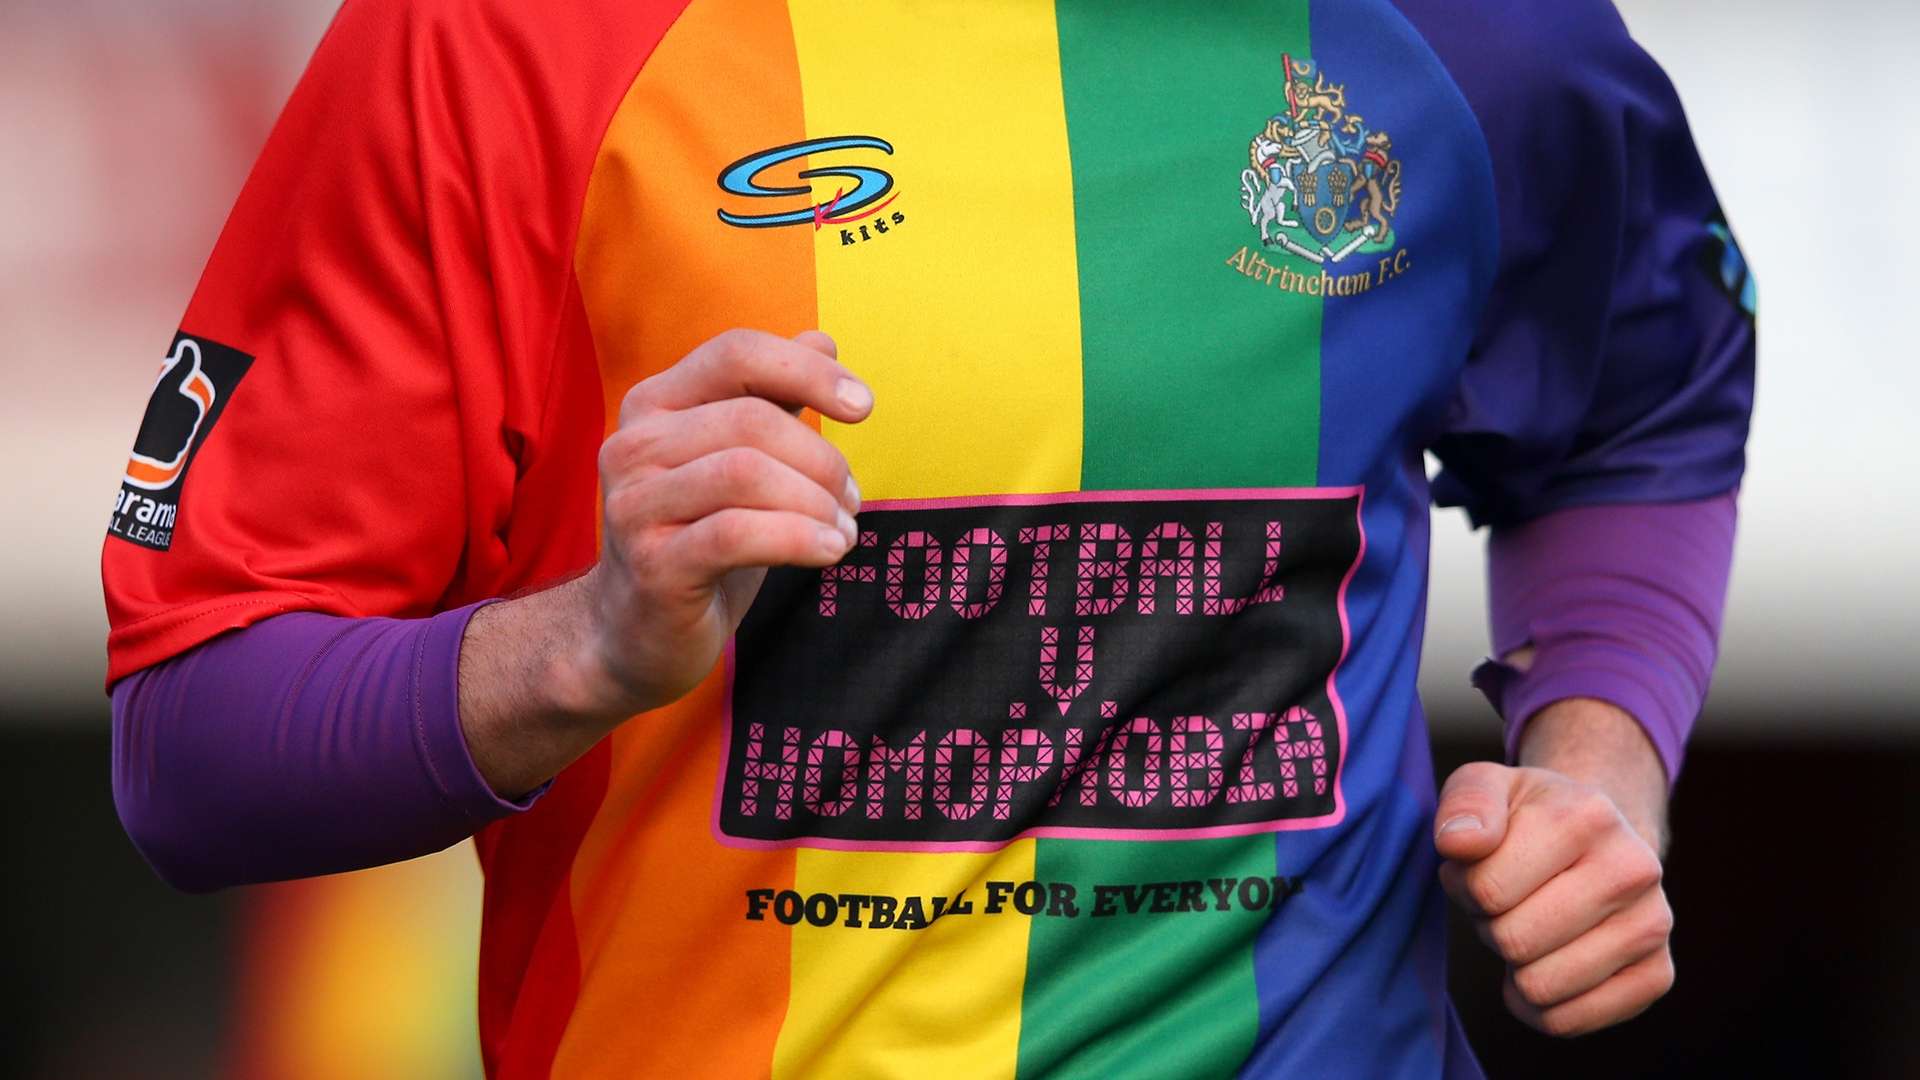 Football v Homophobia Altrincham 2019